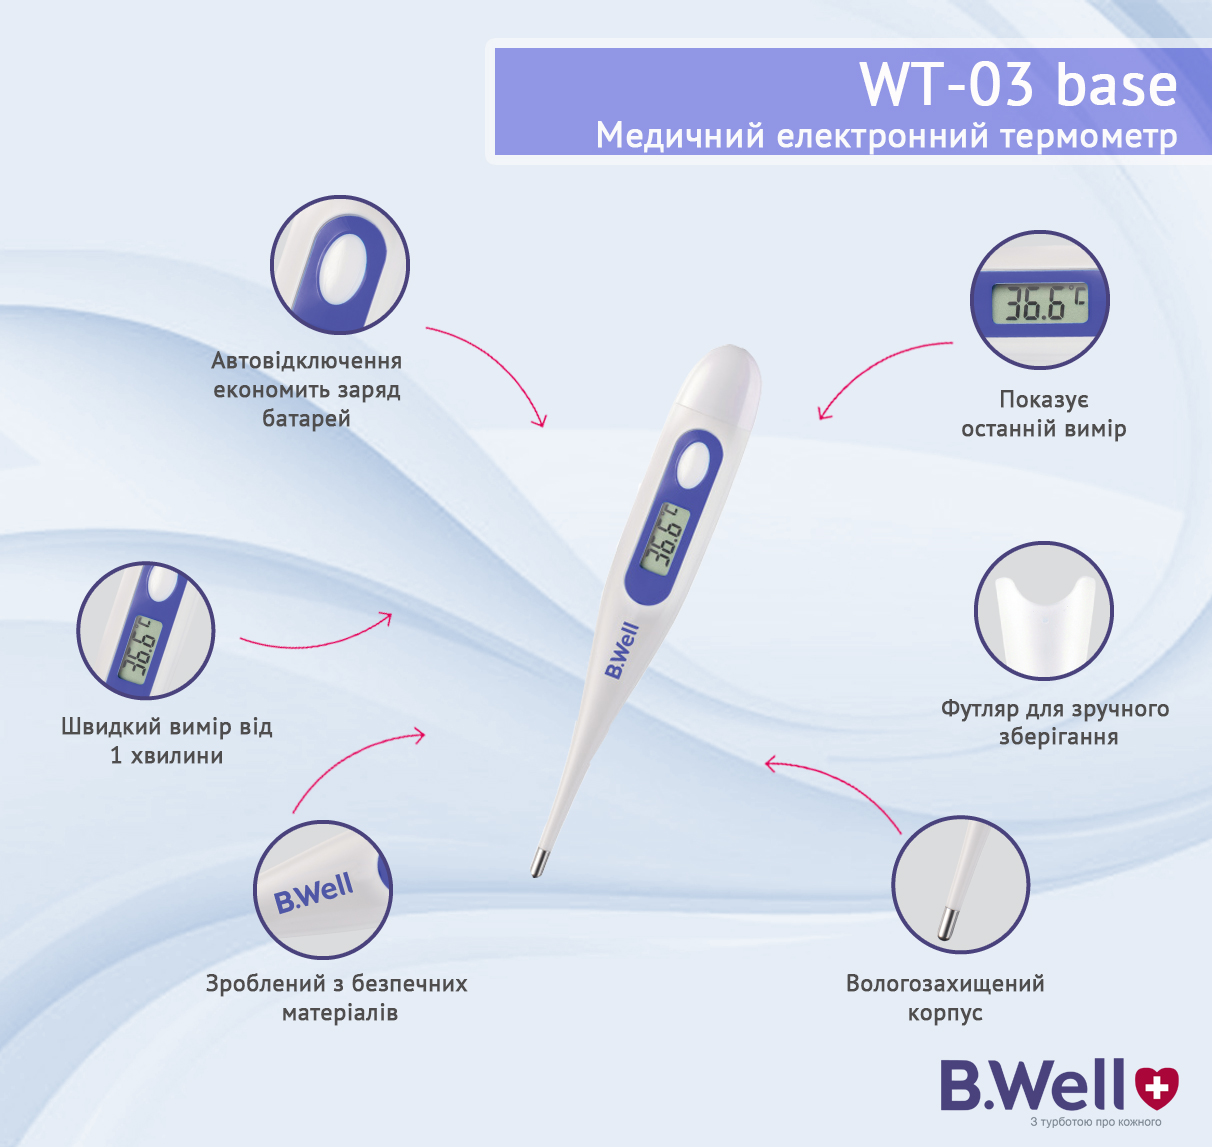 Медичний електронний термометр B.Well WT-03 base (WT-03 base) - фото 2